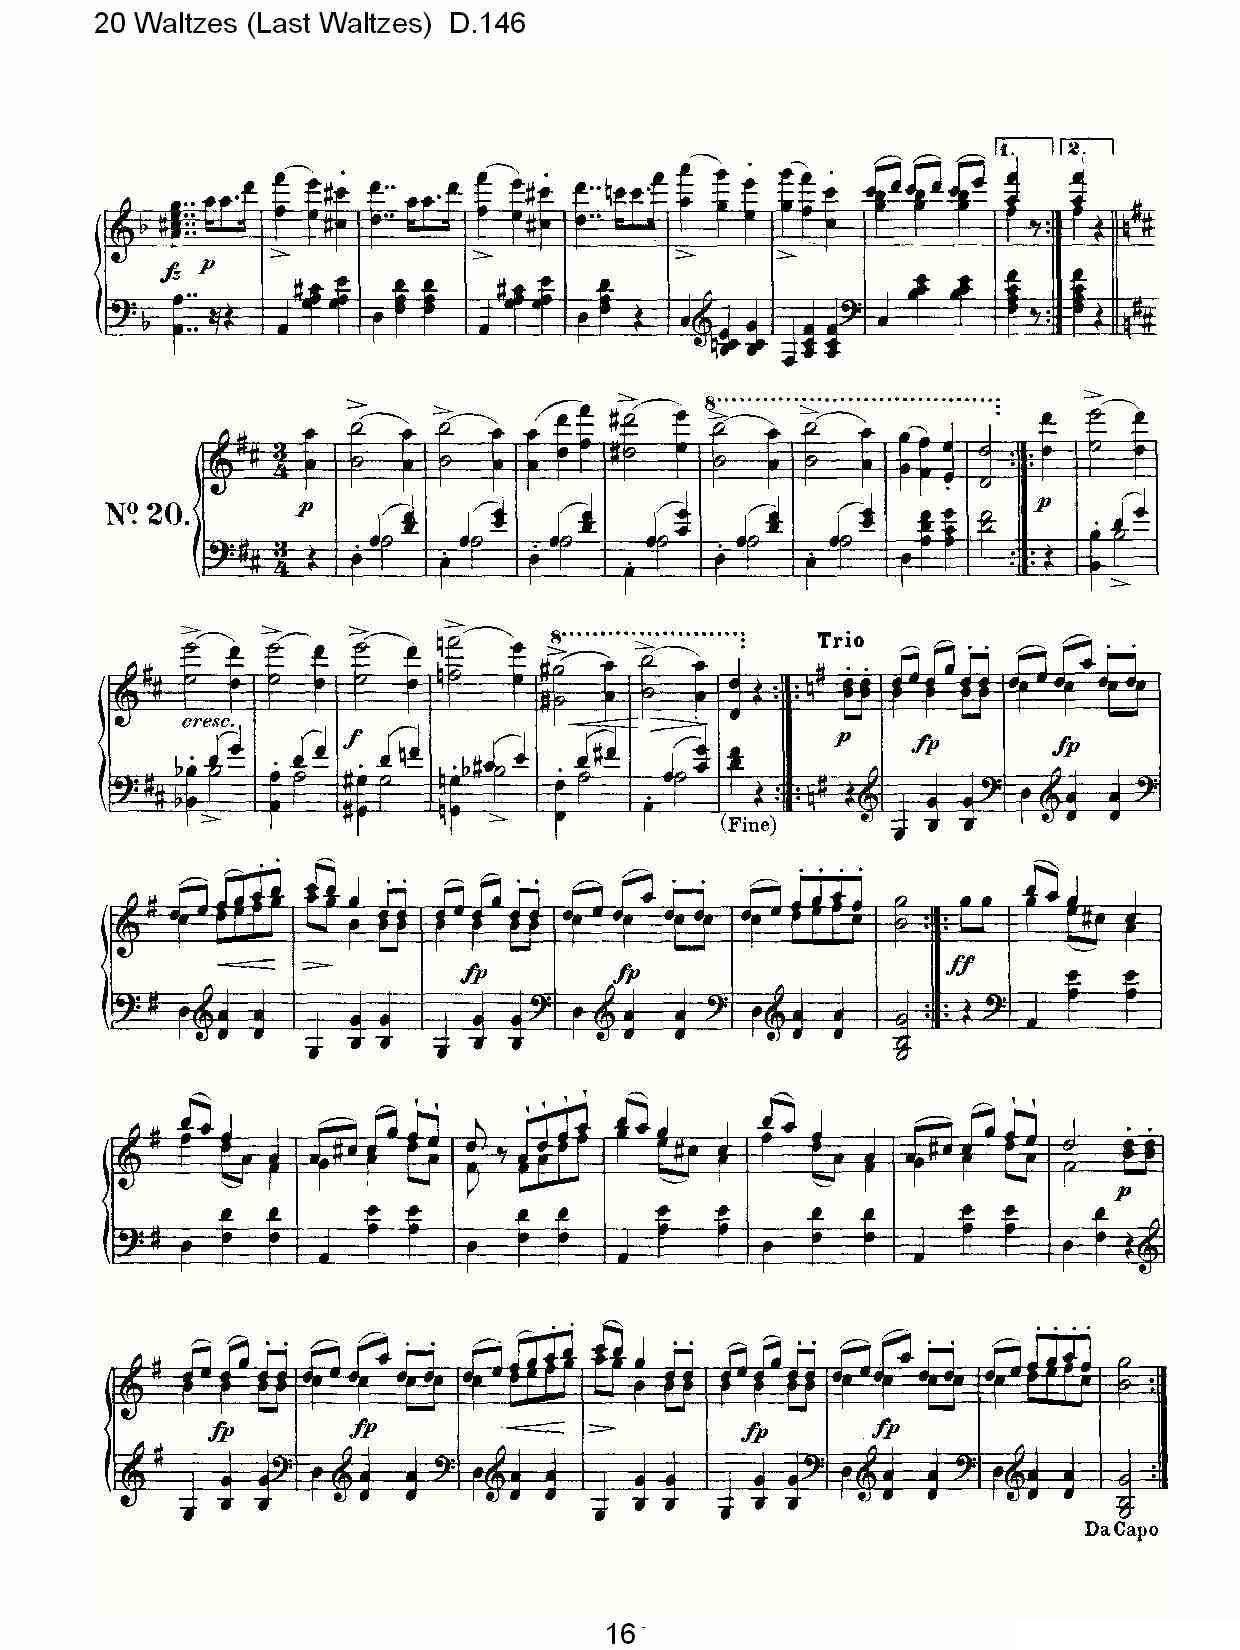 20 Waltzes（Last Waltzes) D.14）钢琴曲谱（图16）